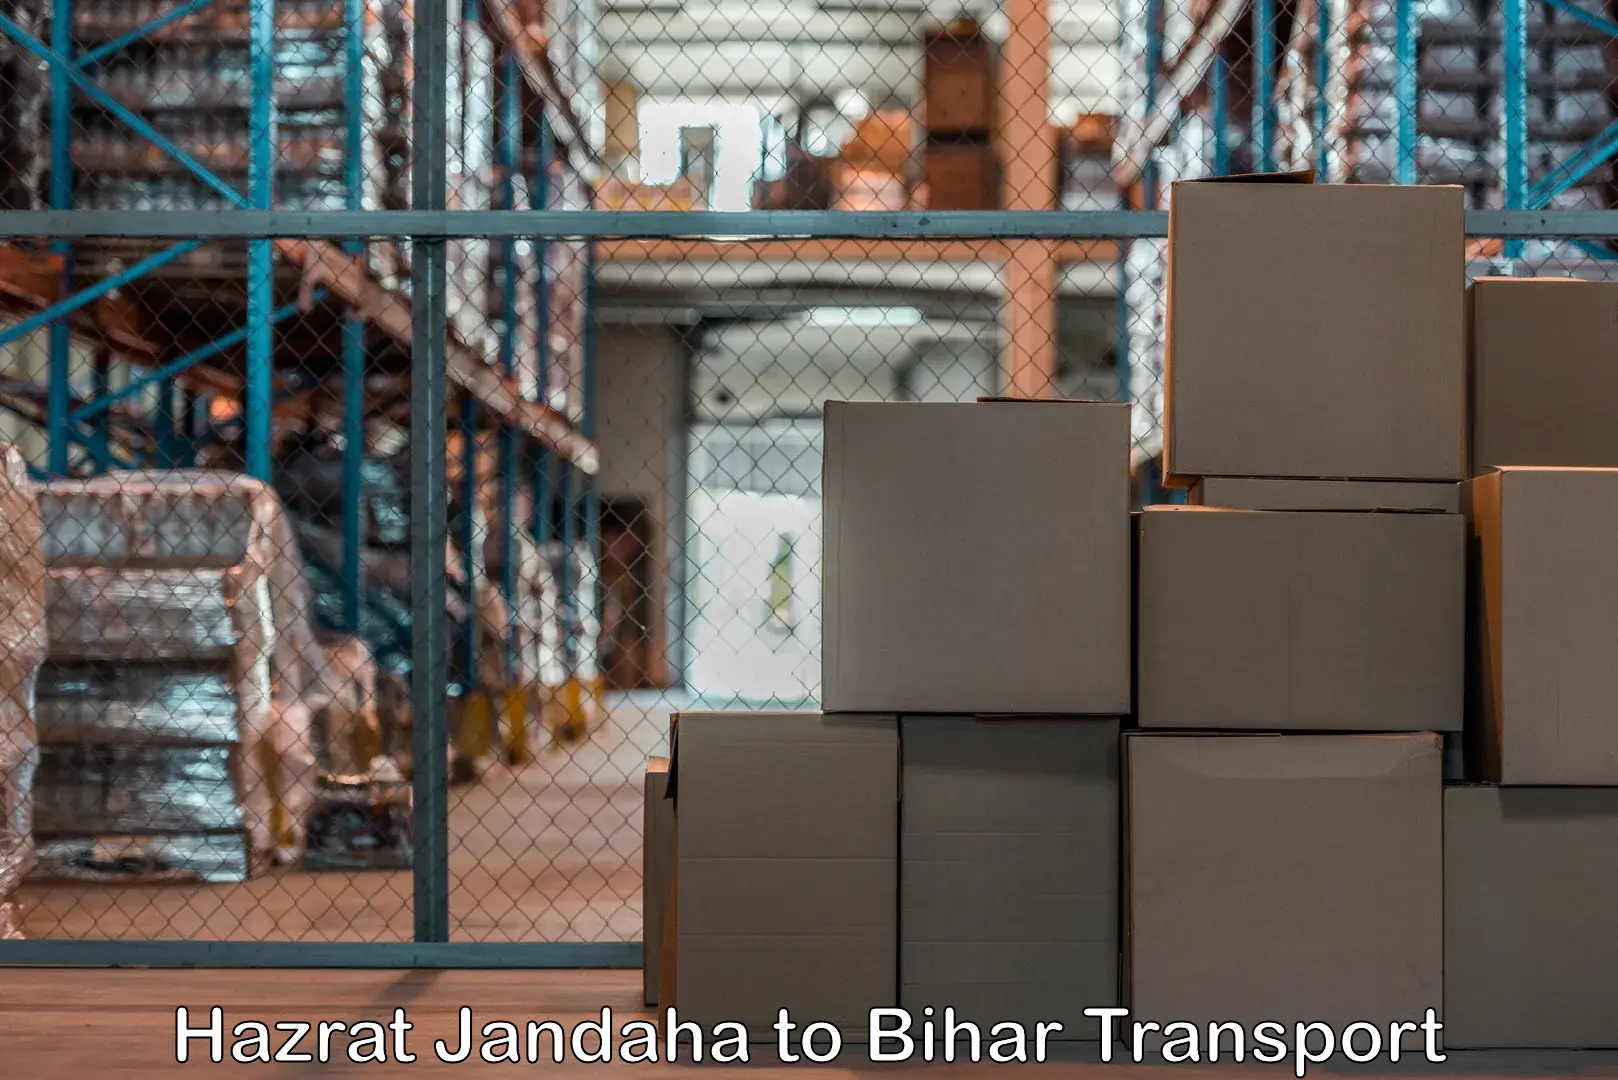 Truck transport companies in India Hazrat Jandaha to Kochas